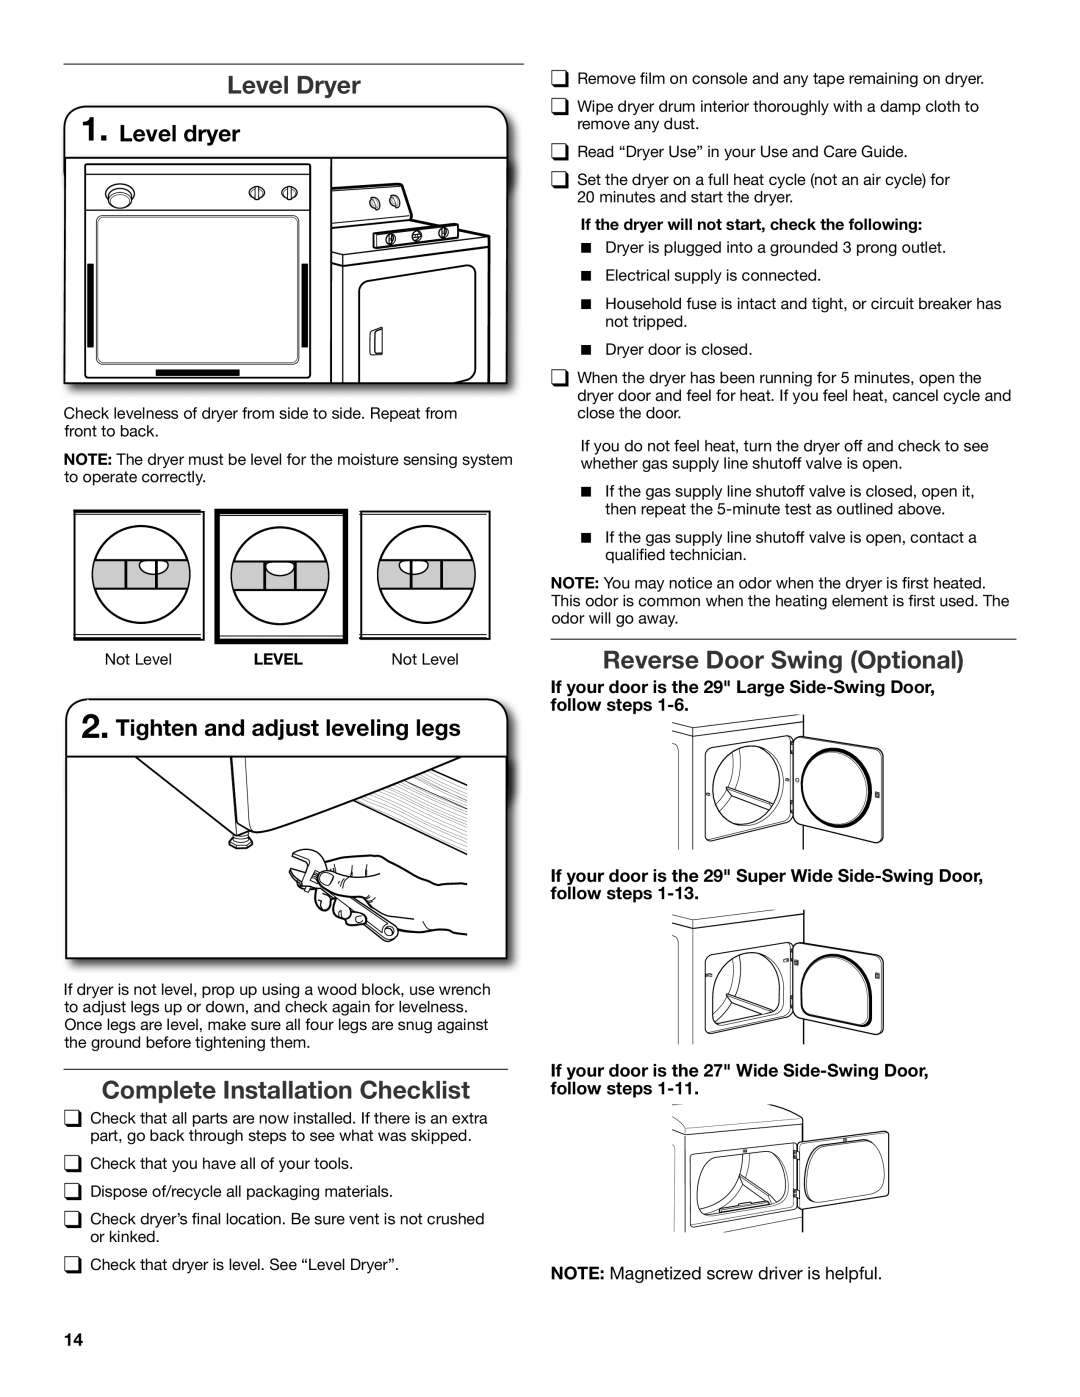 Maytag MGDX600XW, W10097000A-SP Level Dryer, Complete Installation Checklist, Reverse Door Swing Optional, Level dryer 